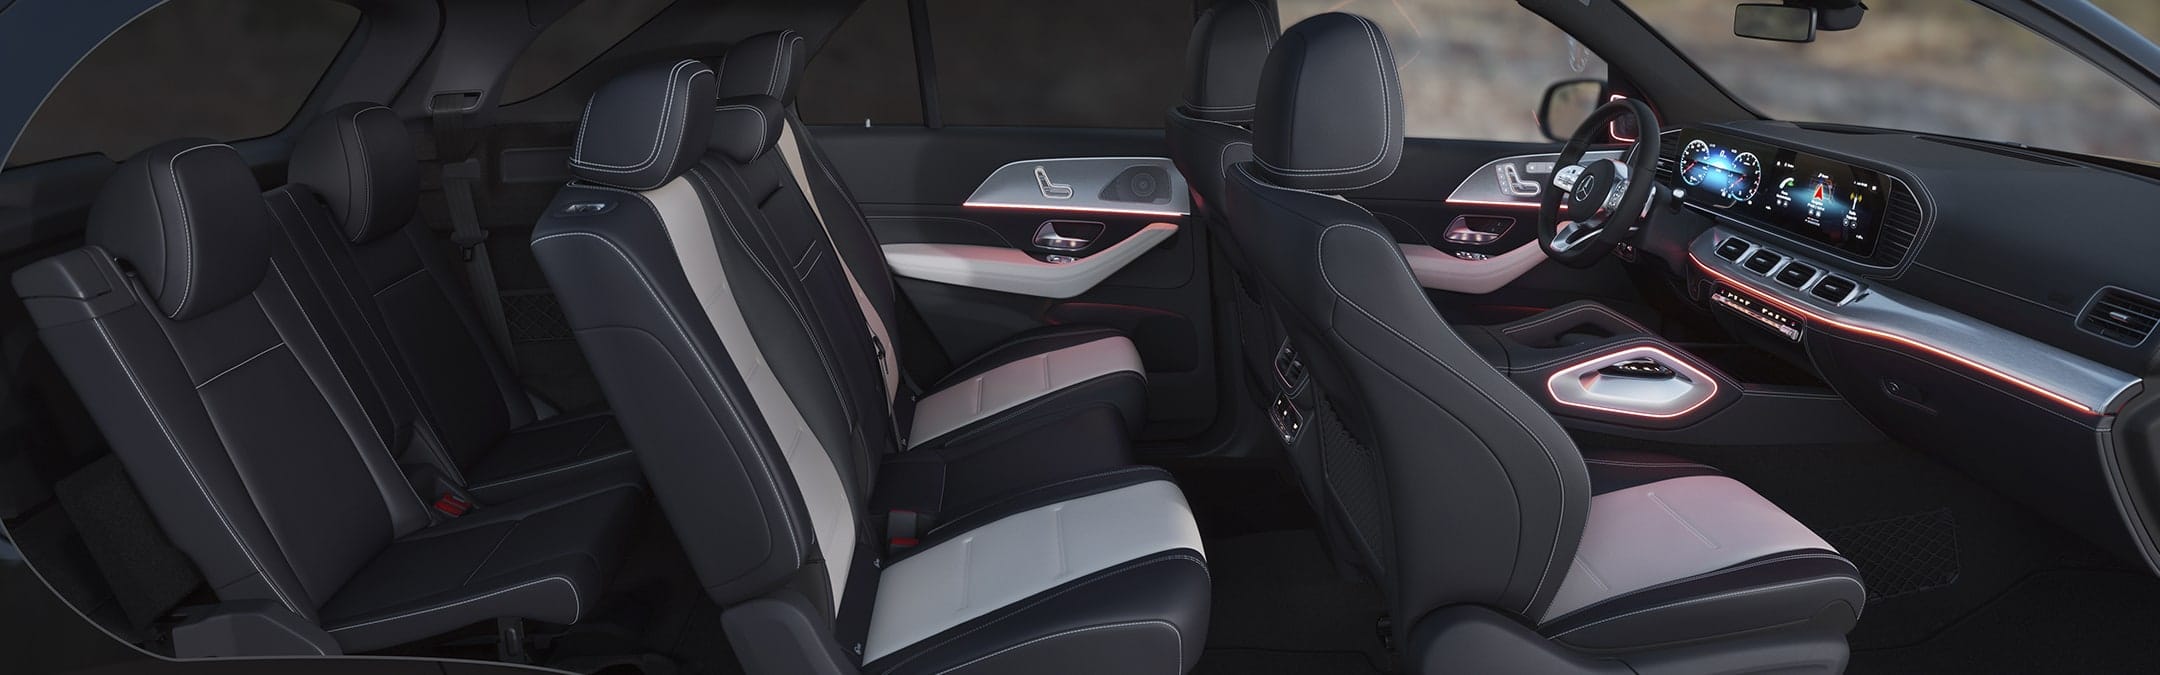 Mercedes-Benz GLE-Class Hybrid interior